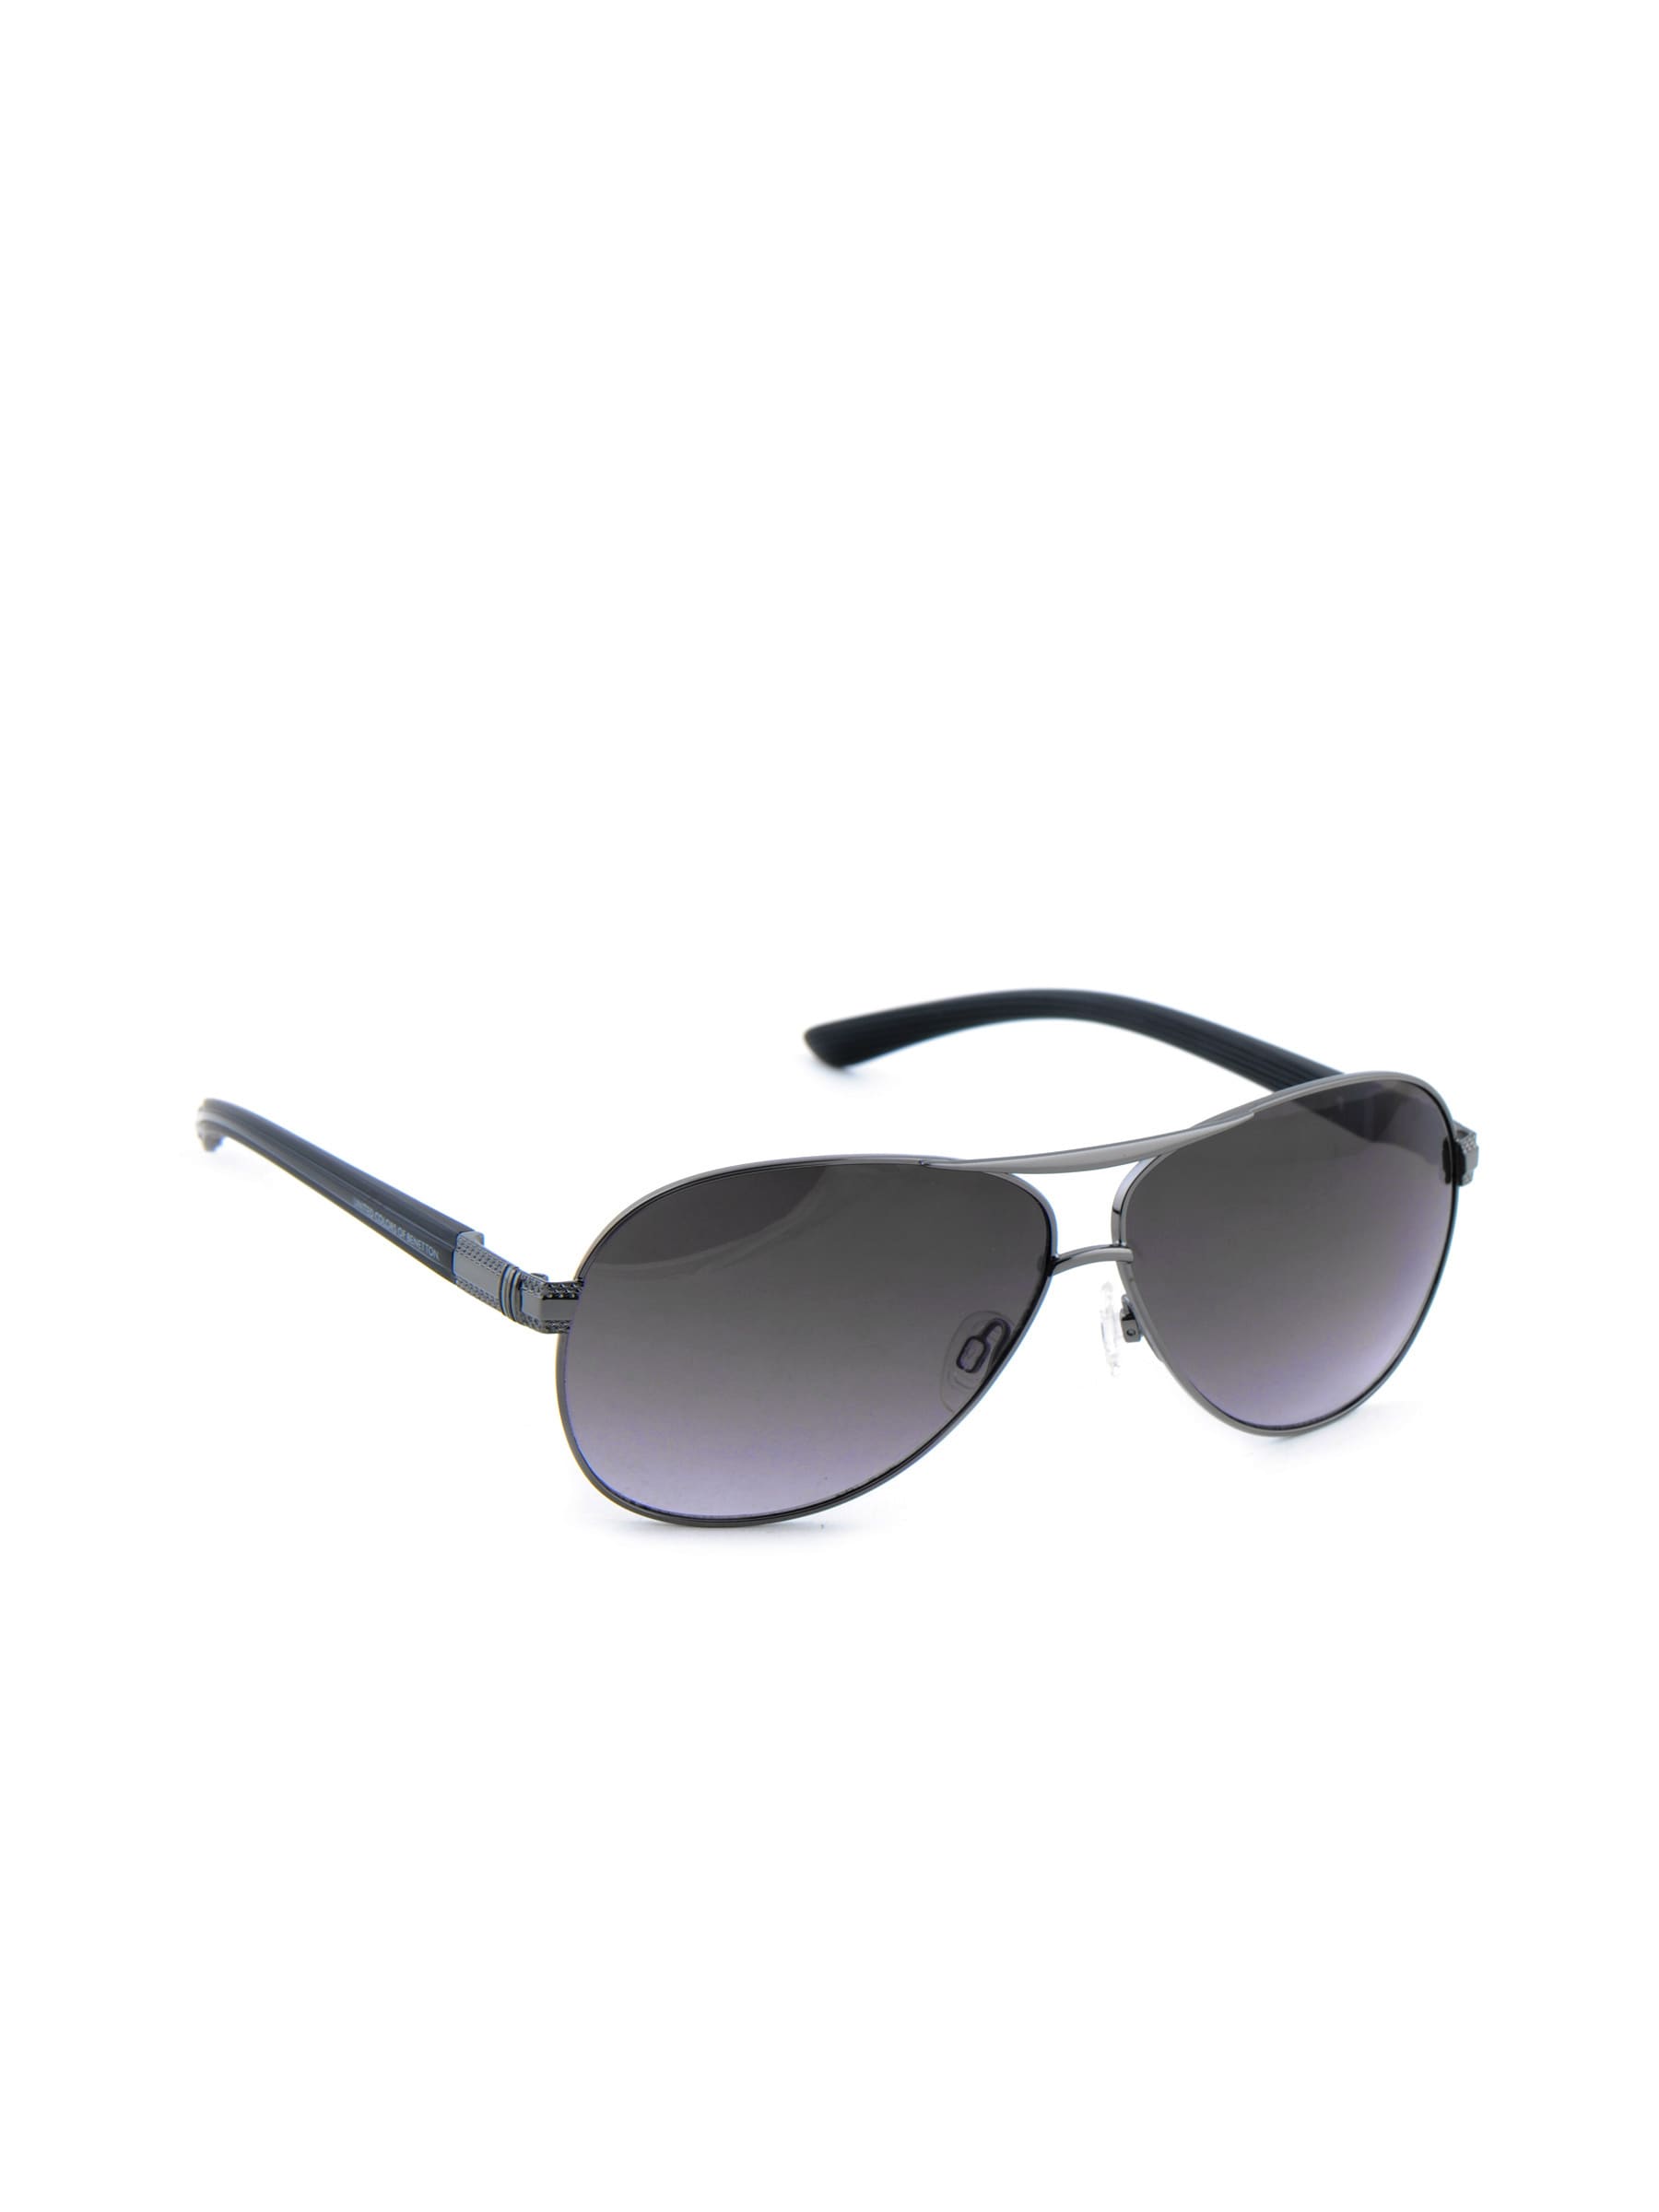 United Colors of Benetton Men Funky Eyewear Black Sunglasses